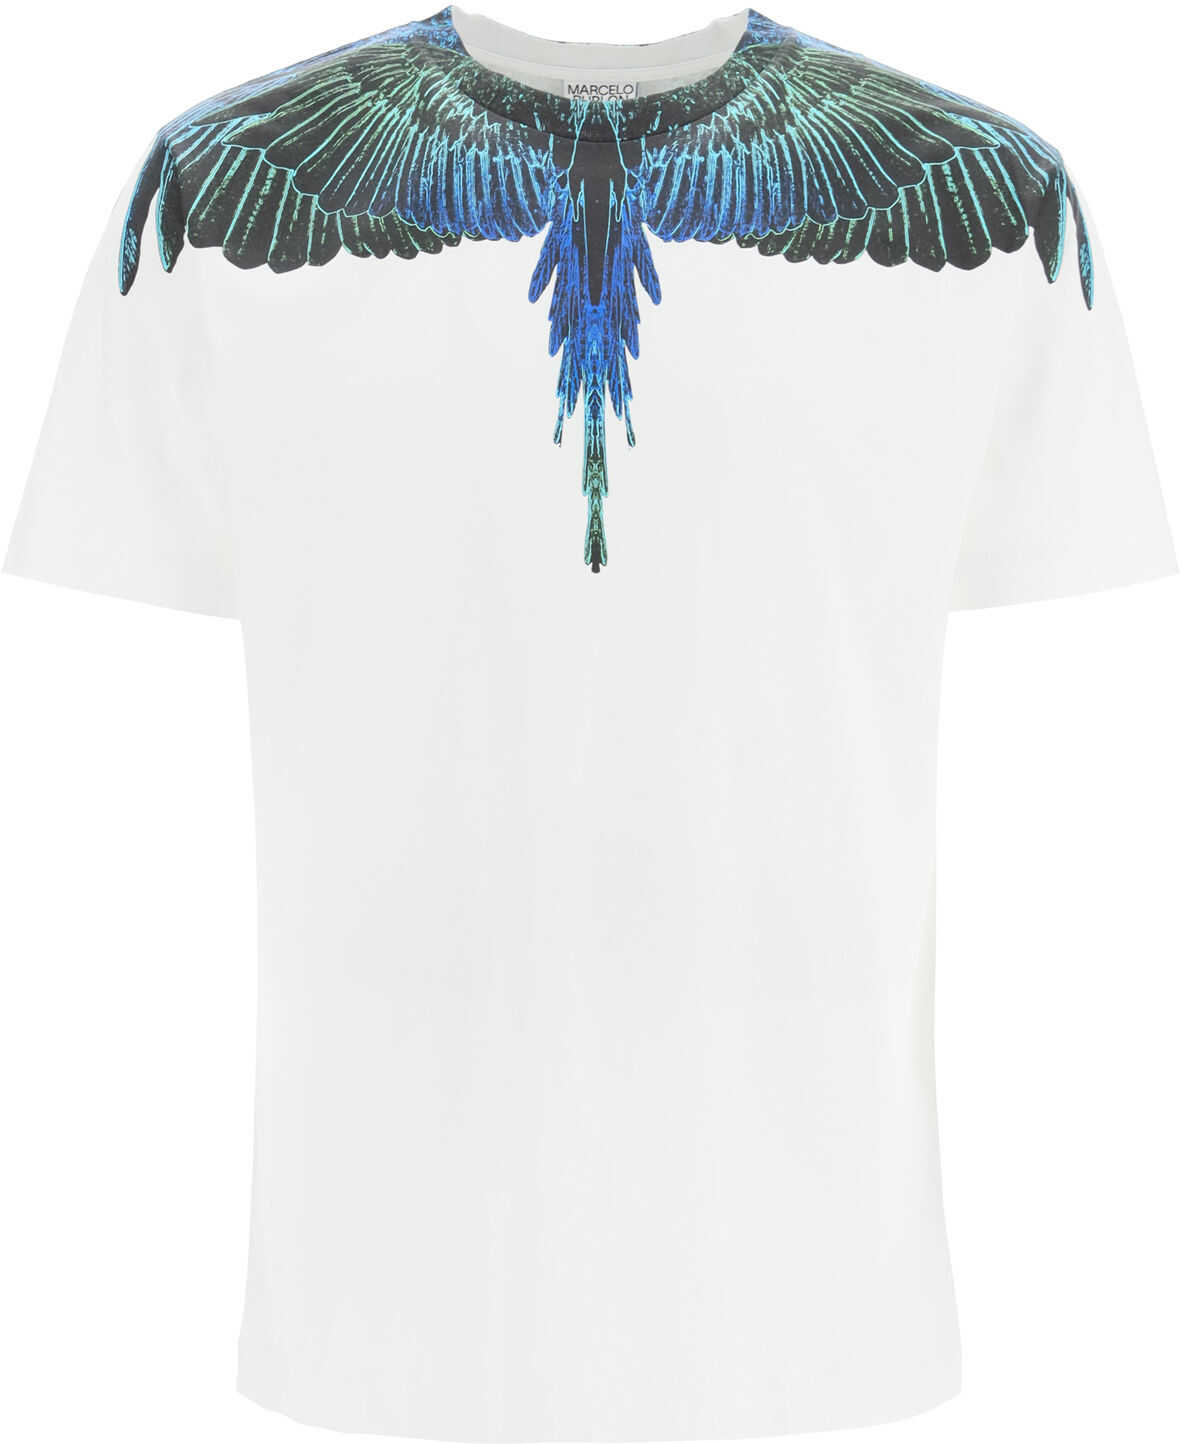 Marcelo Burlon Wings Blue Neon Print T-Shirt WHITE BLUE NEON